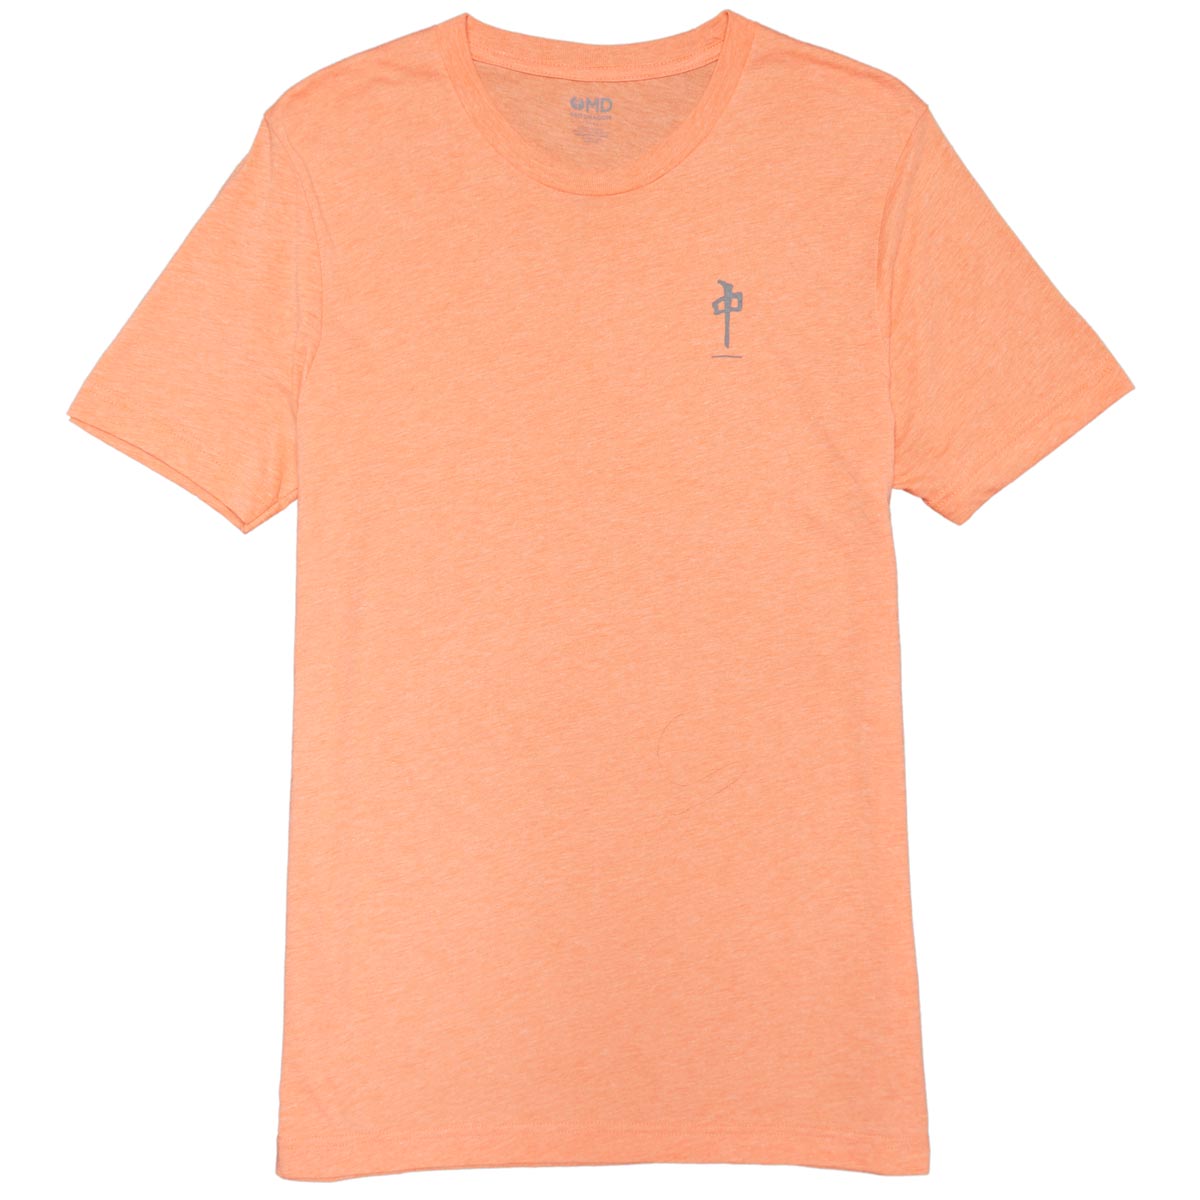 RDS Triblend Underline Chung T-Shirt - Orange/Grey image 1